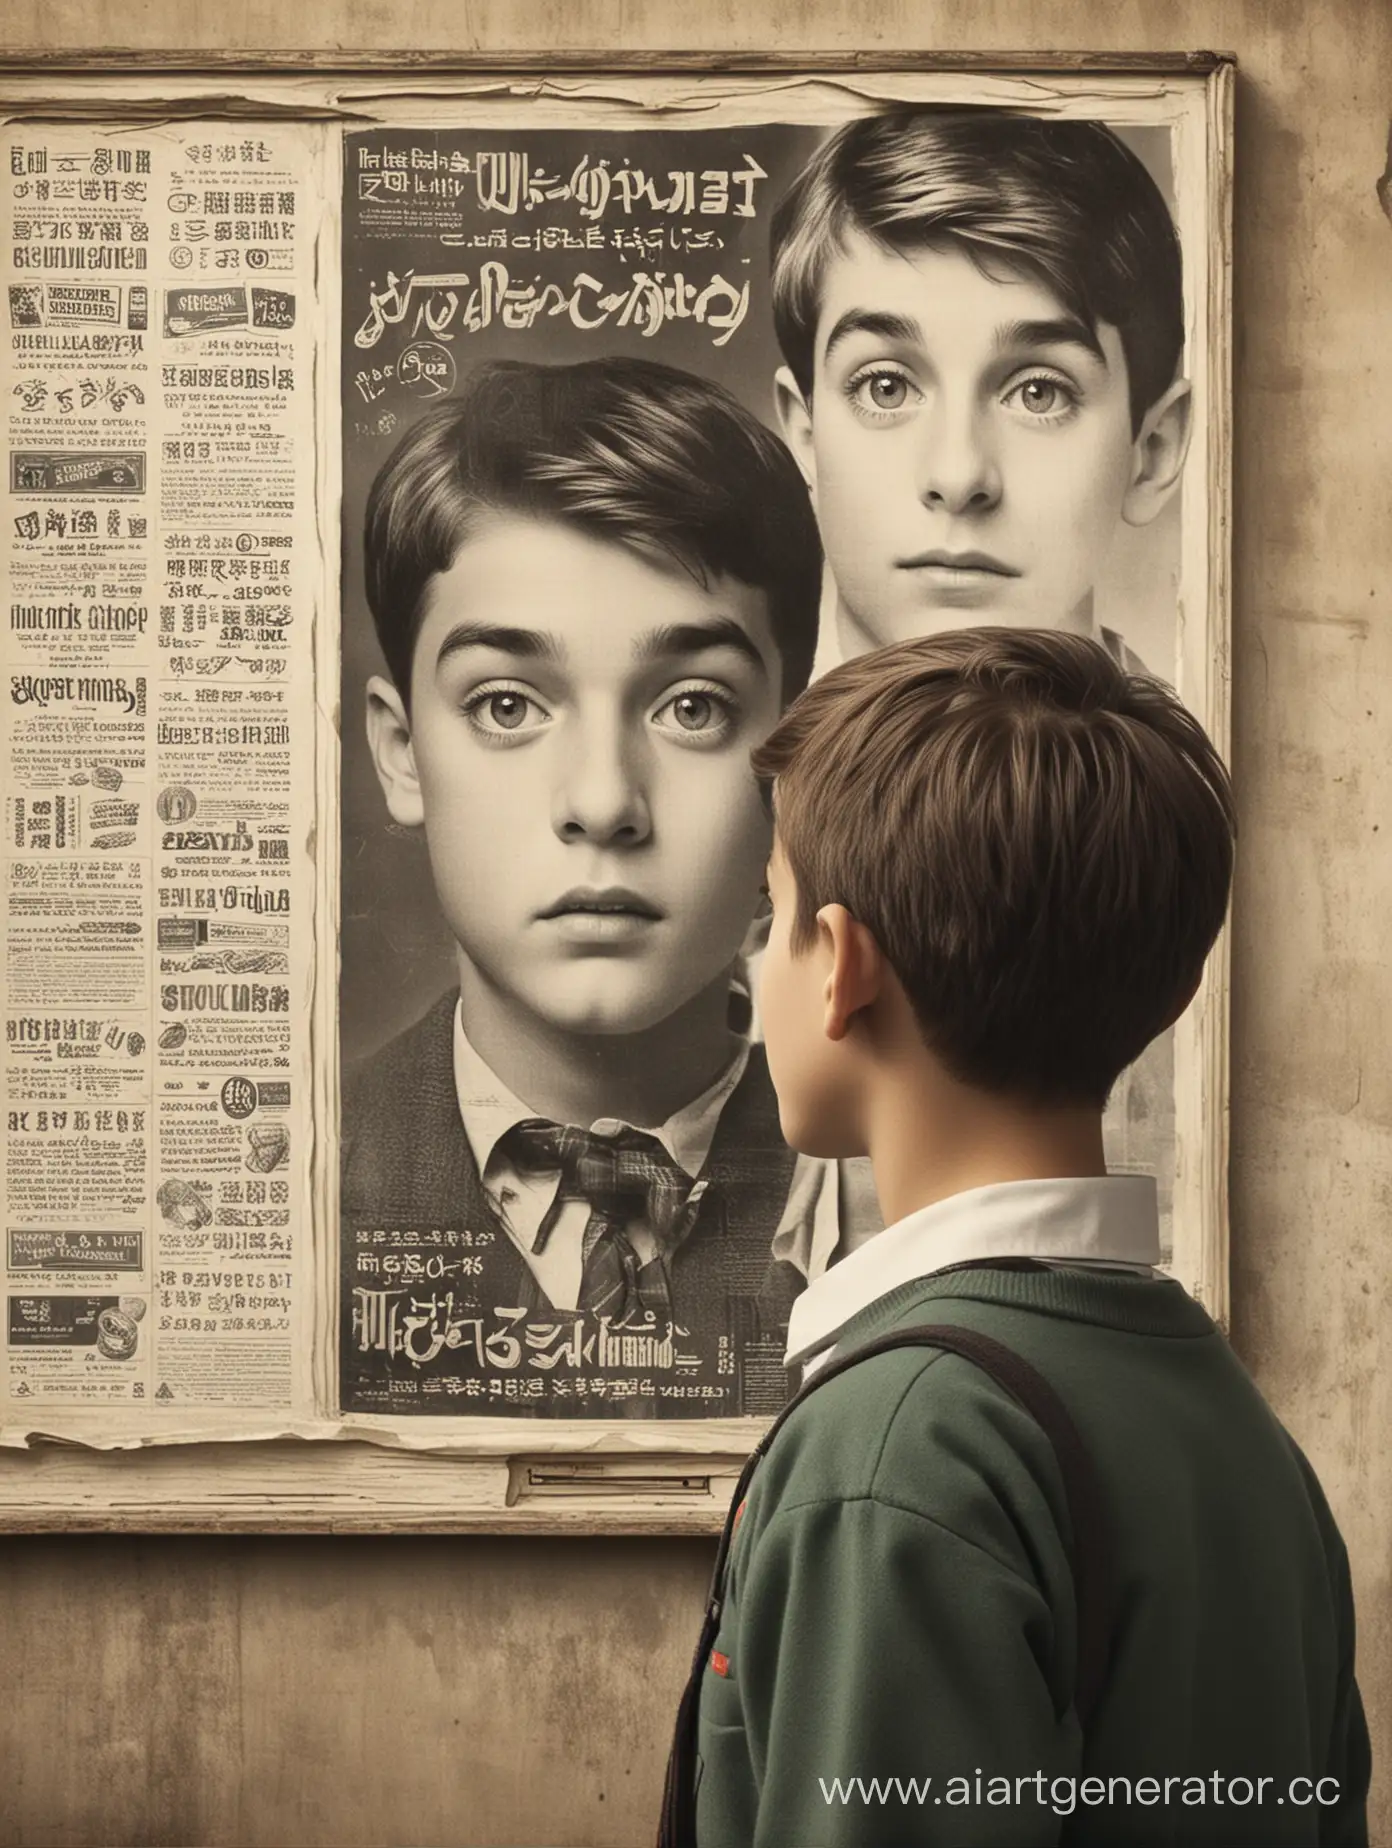 Schoolboy-Gazing-at-Advertising-Display